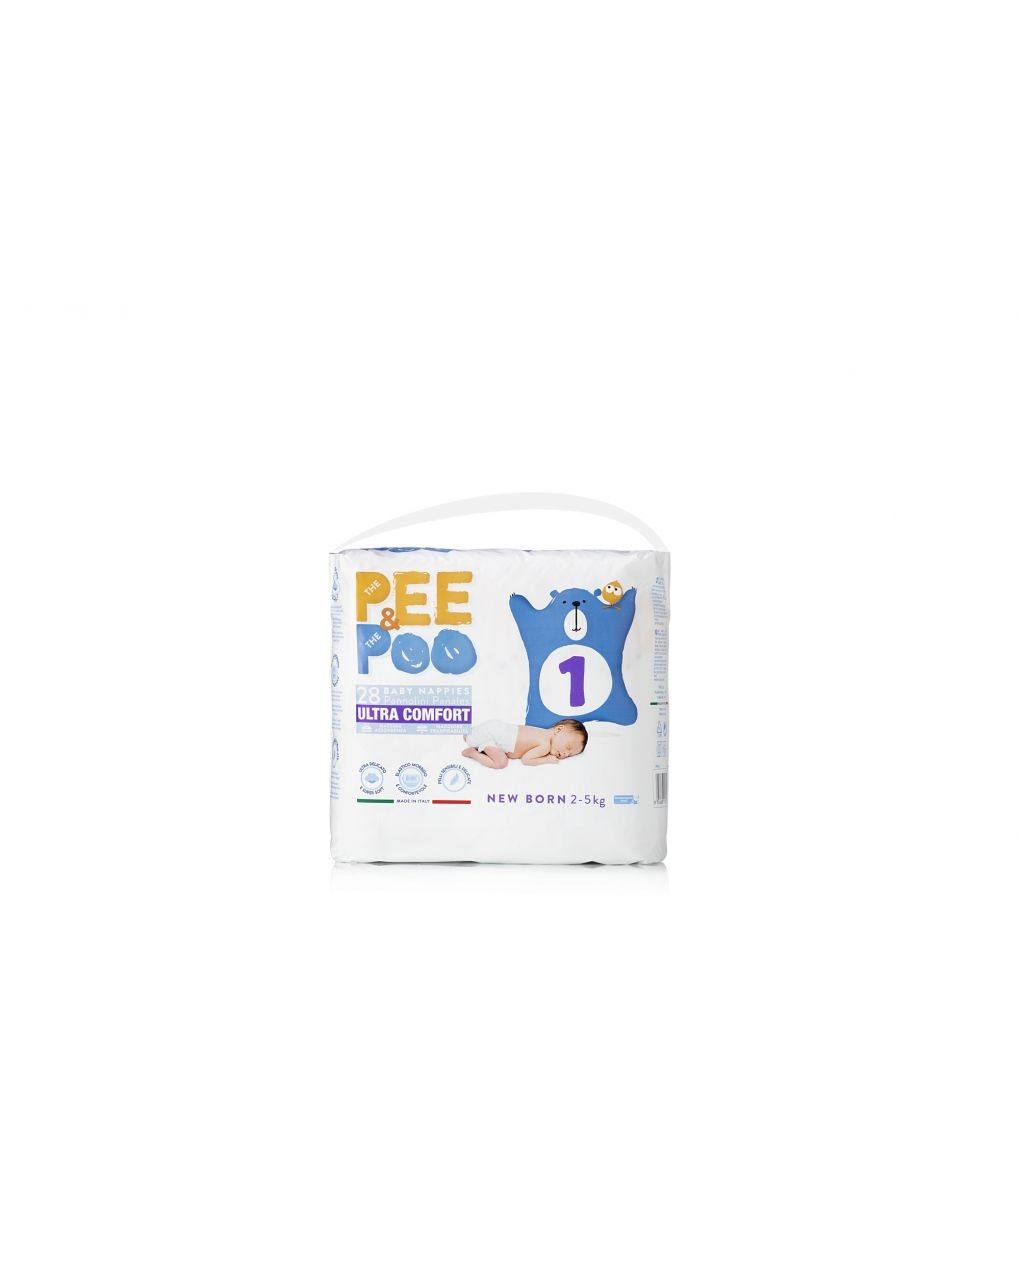 Pee&poo – πάνες μέγεθος new born 28 τμχ - The Pee & The Poo